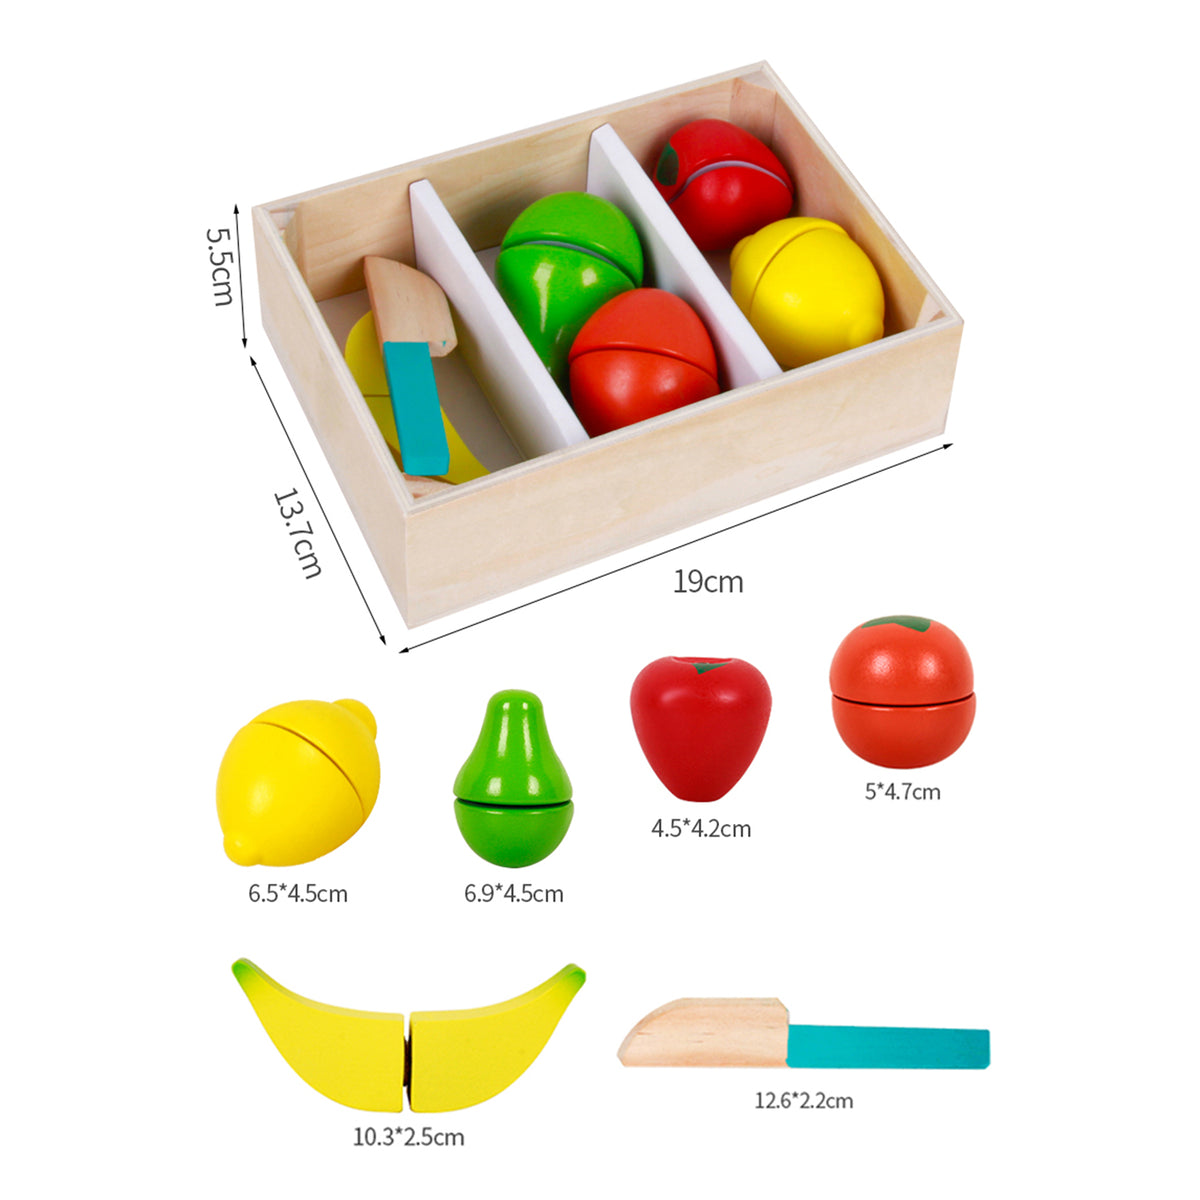 Buy Vegetable Cutting Set (15 Pcs) Online - Educational Toys Pakistan